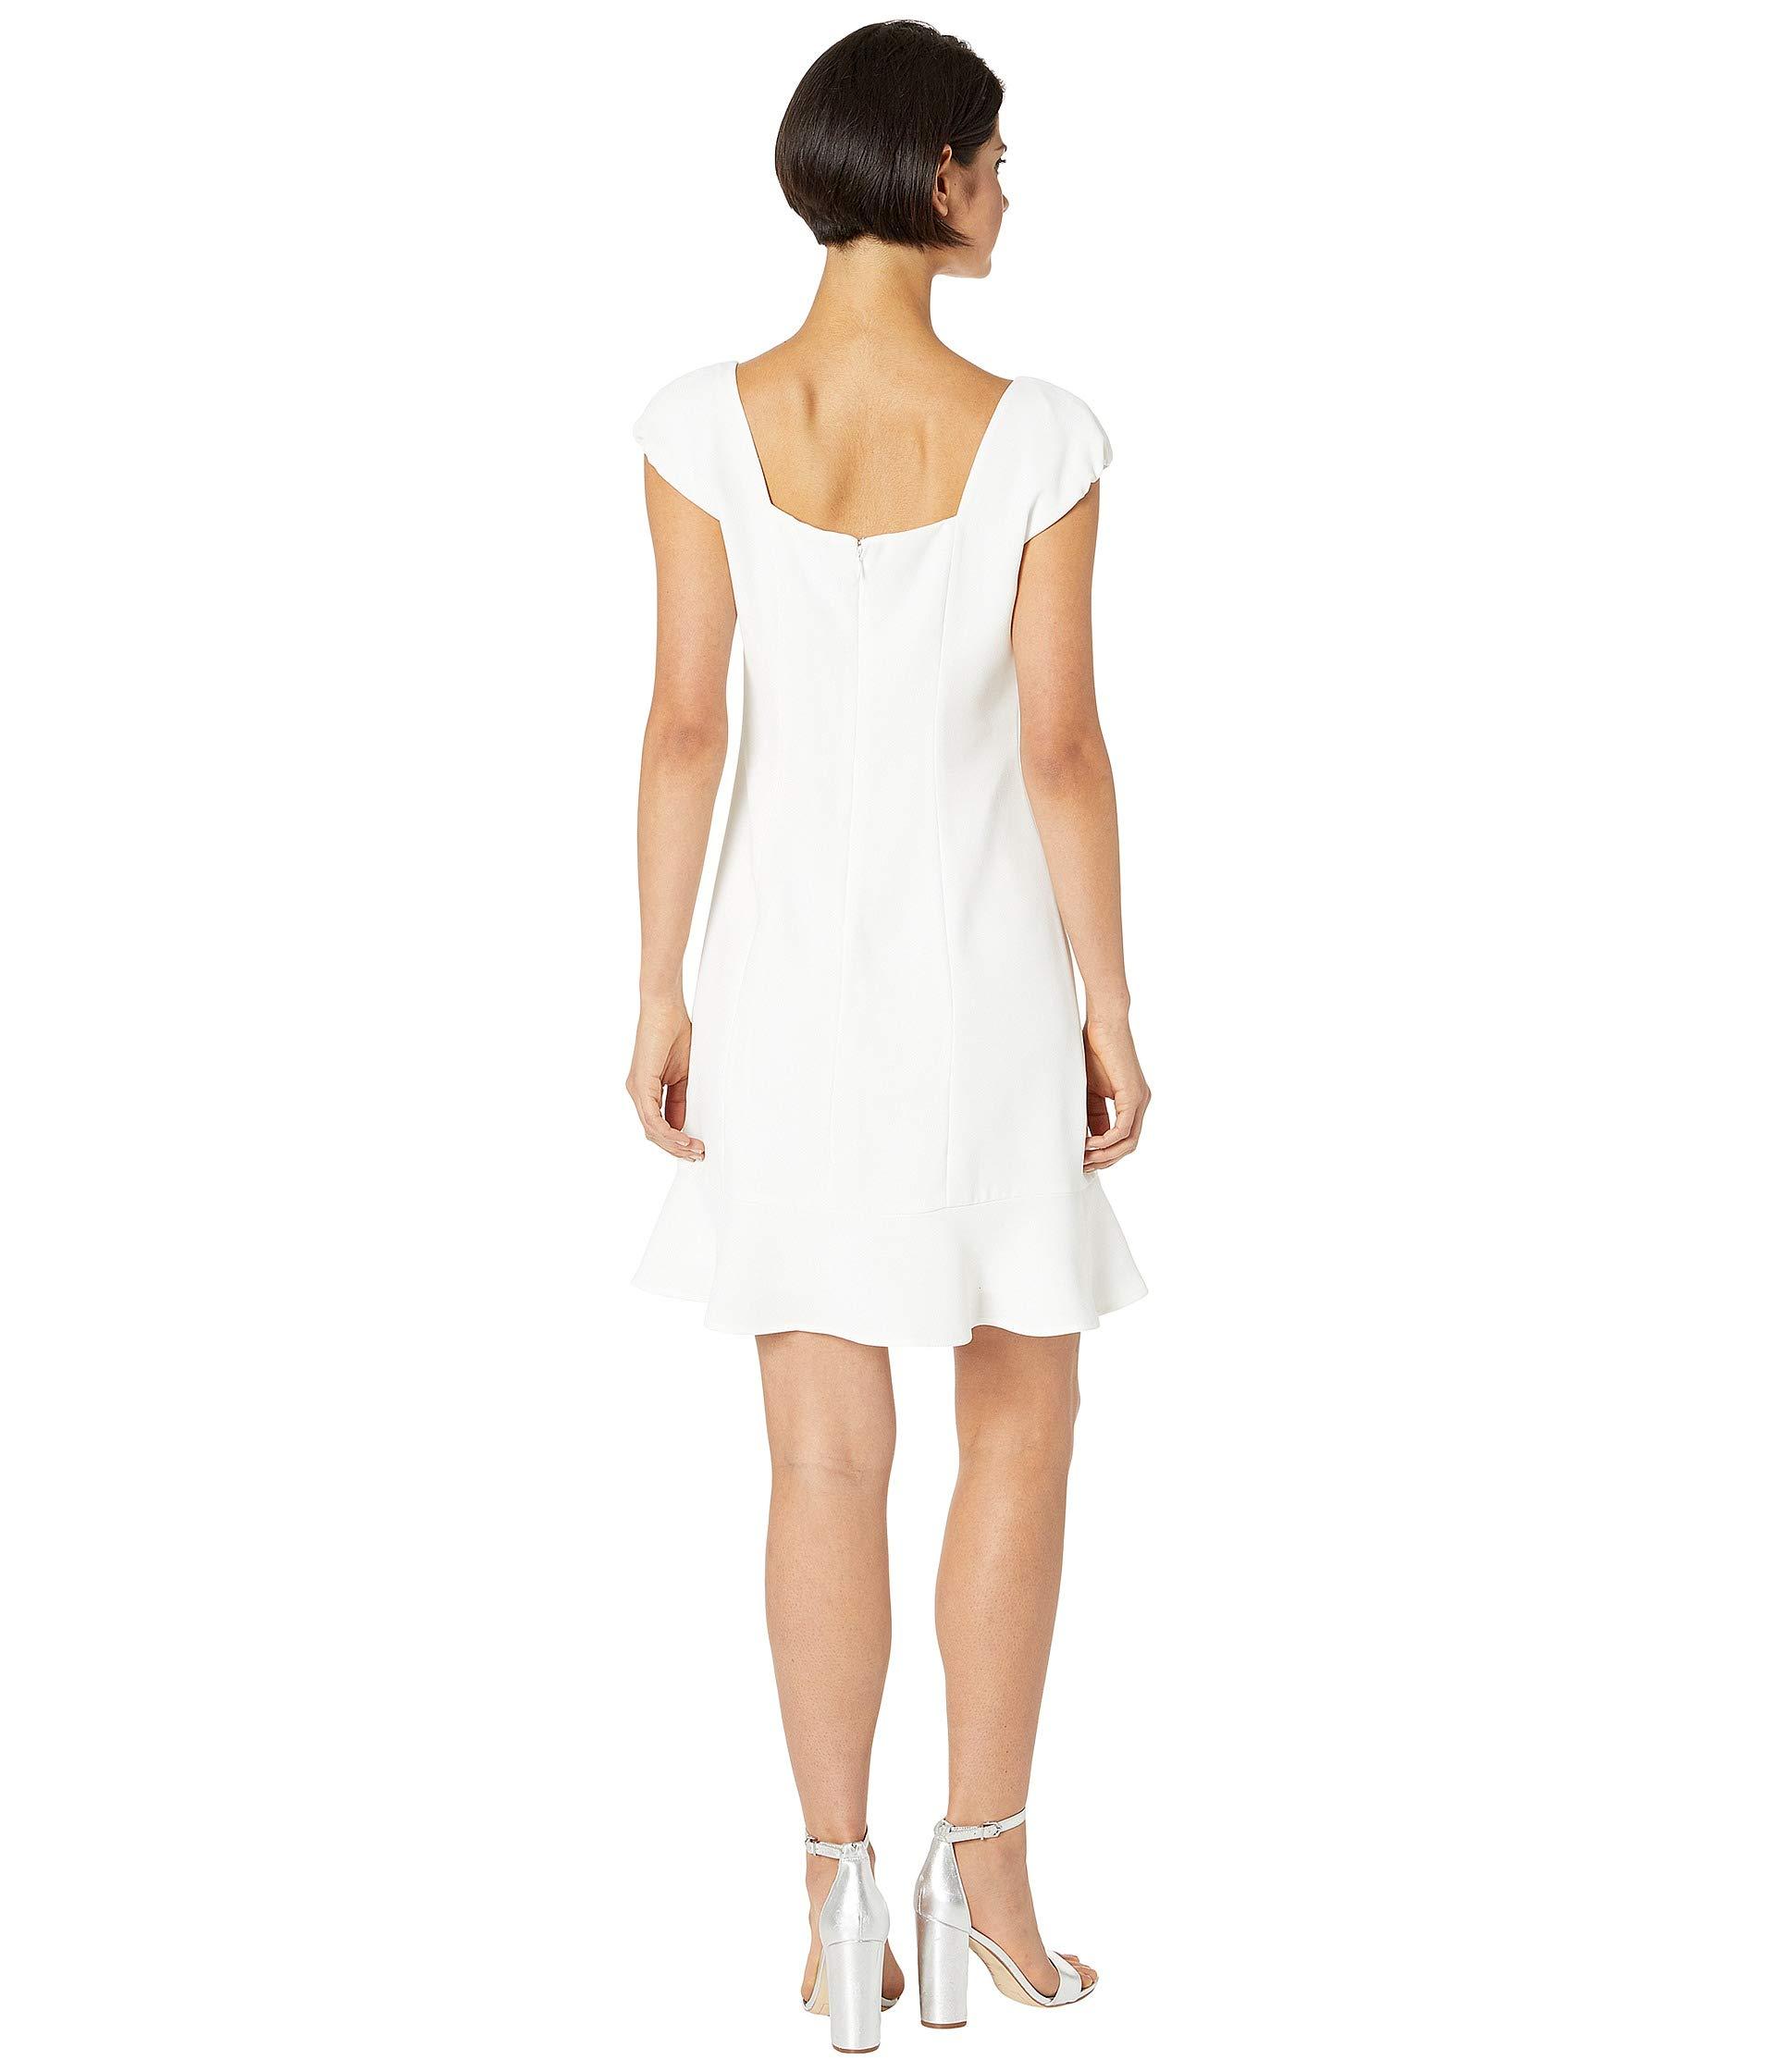 Cece Synthetic Cap Sleeve Moss Crepe Dress W/ Ruffle in White - Lyst